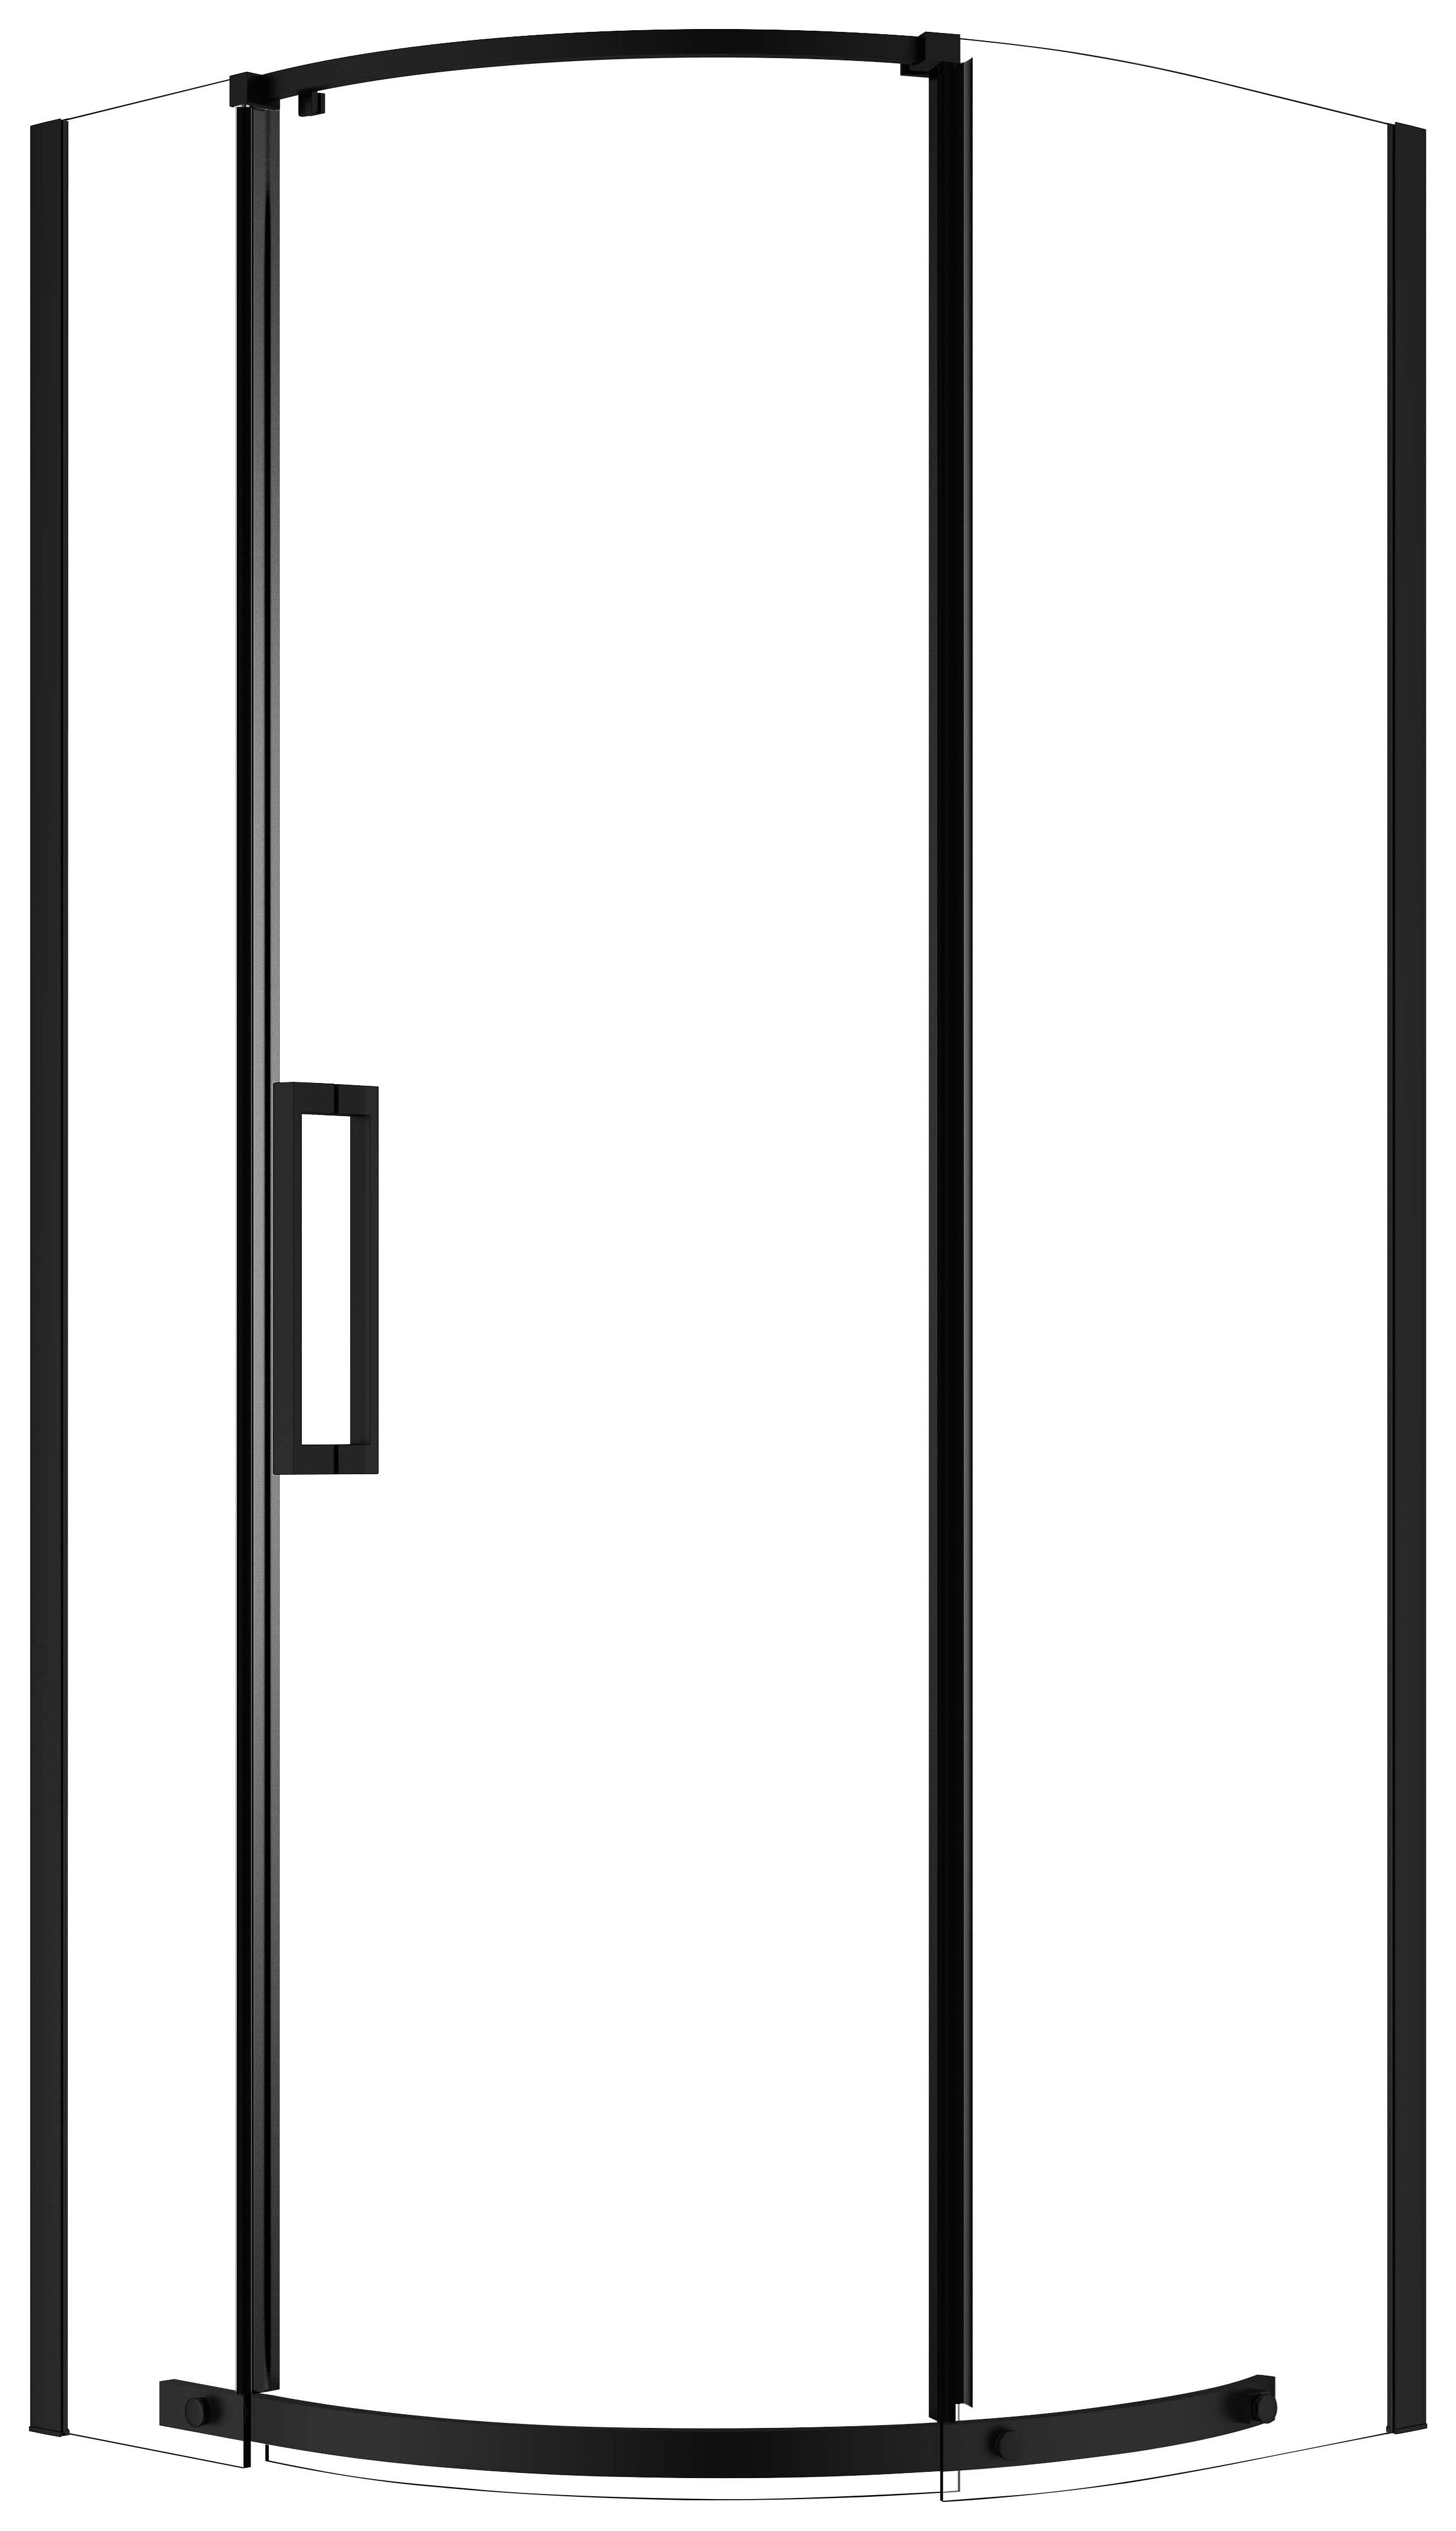 Nexa By Merlyn 8mm Black Frameless Quadrant Single Sliding Door Right Opening Shower Enclosure - 900 x 900mm